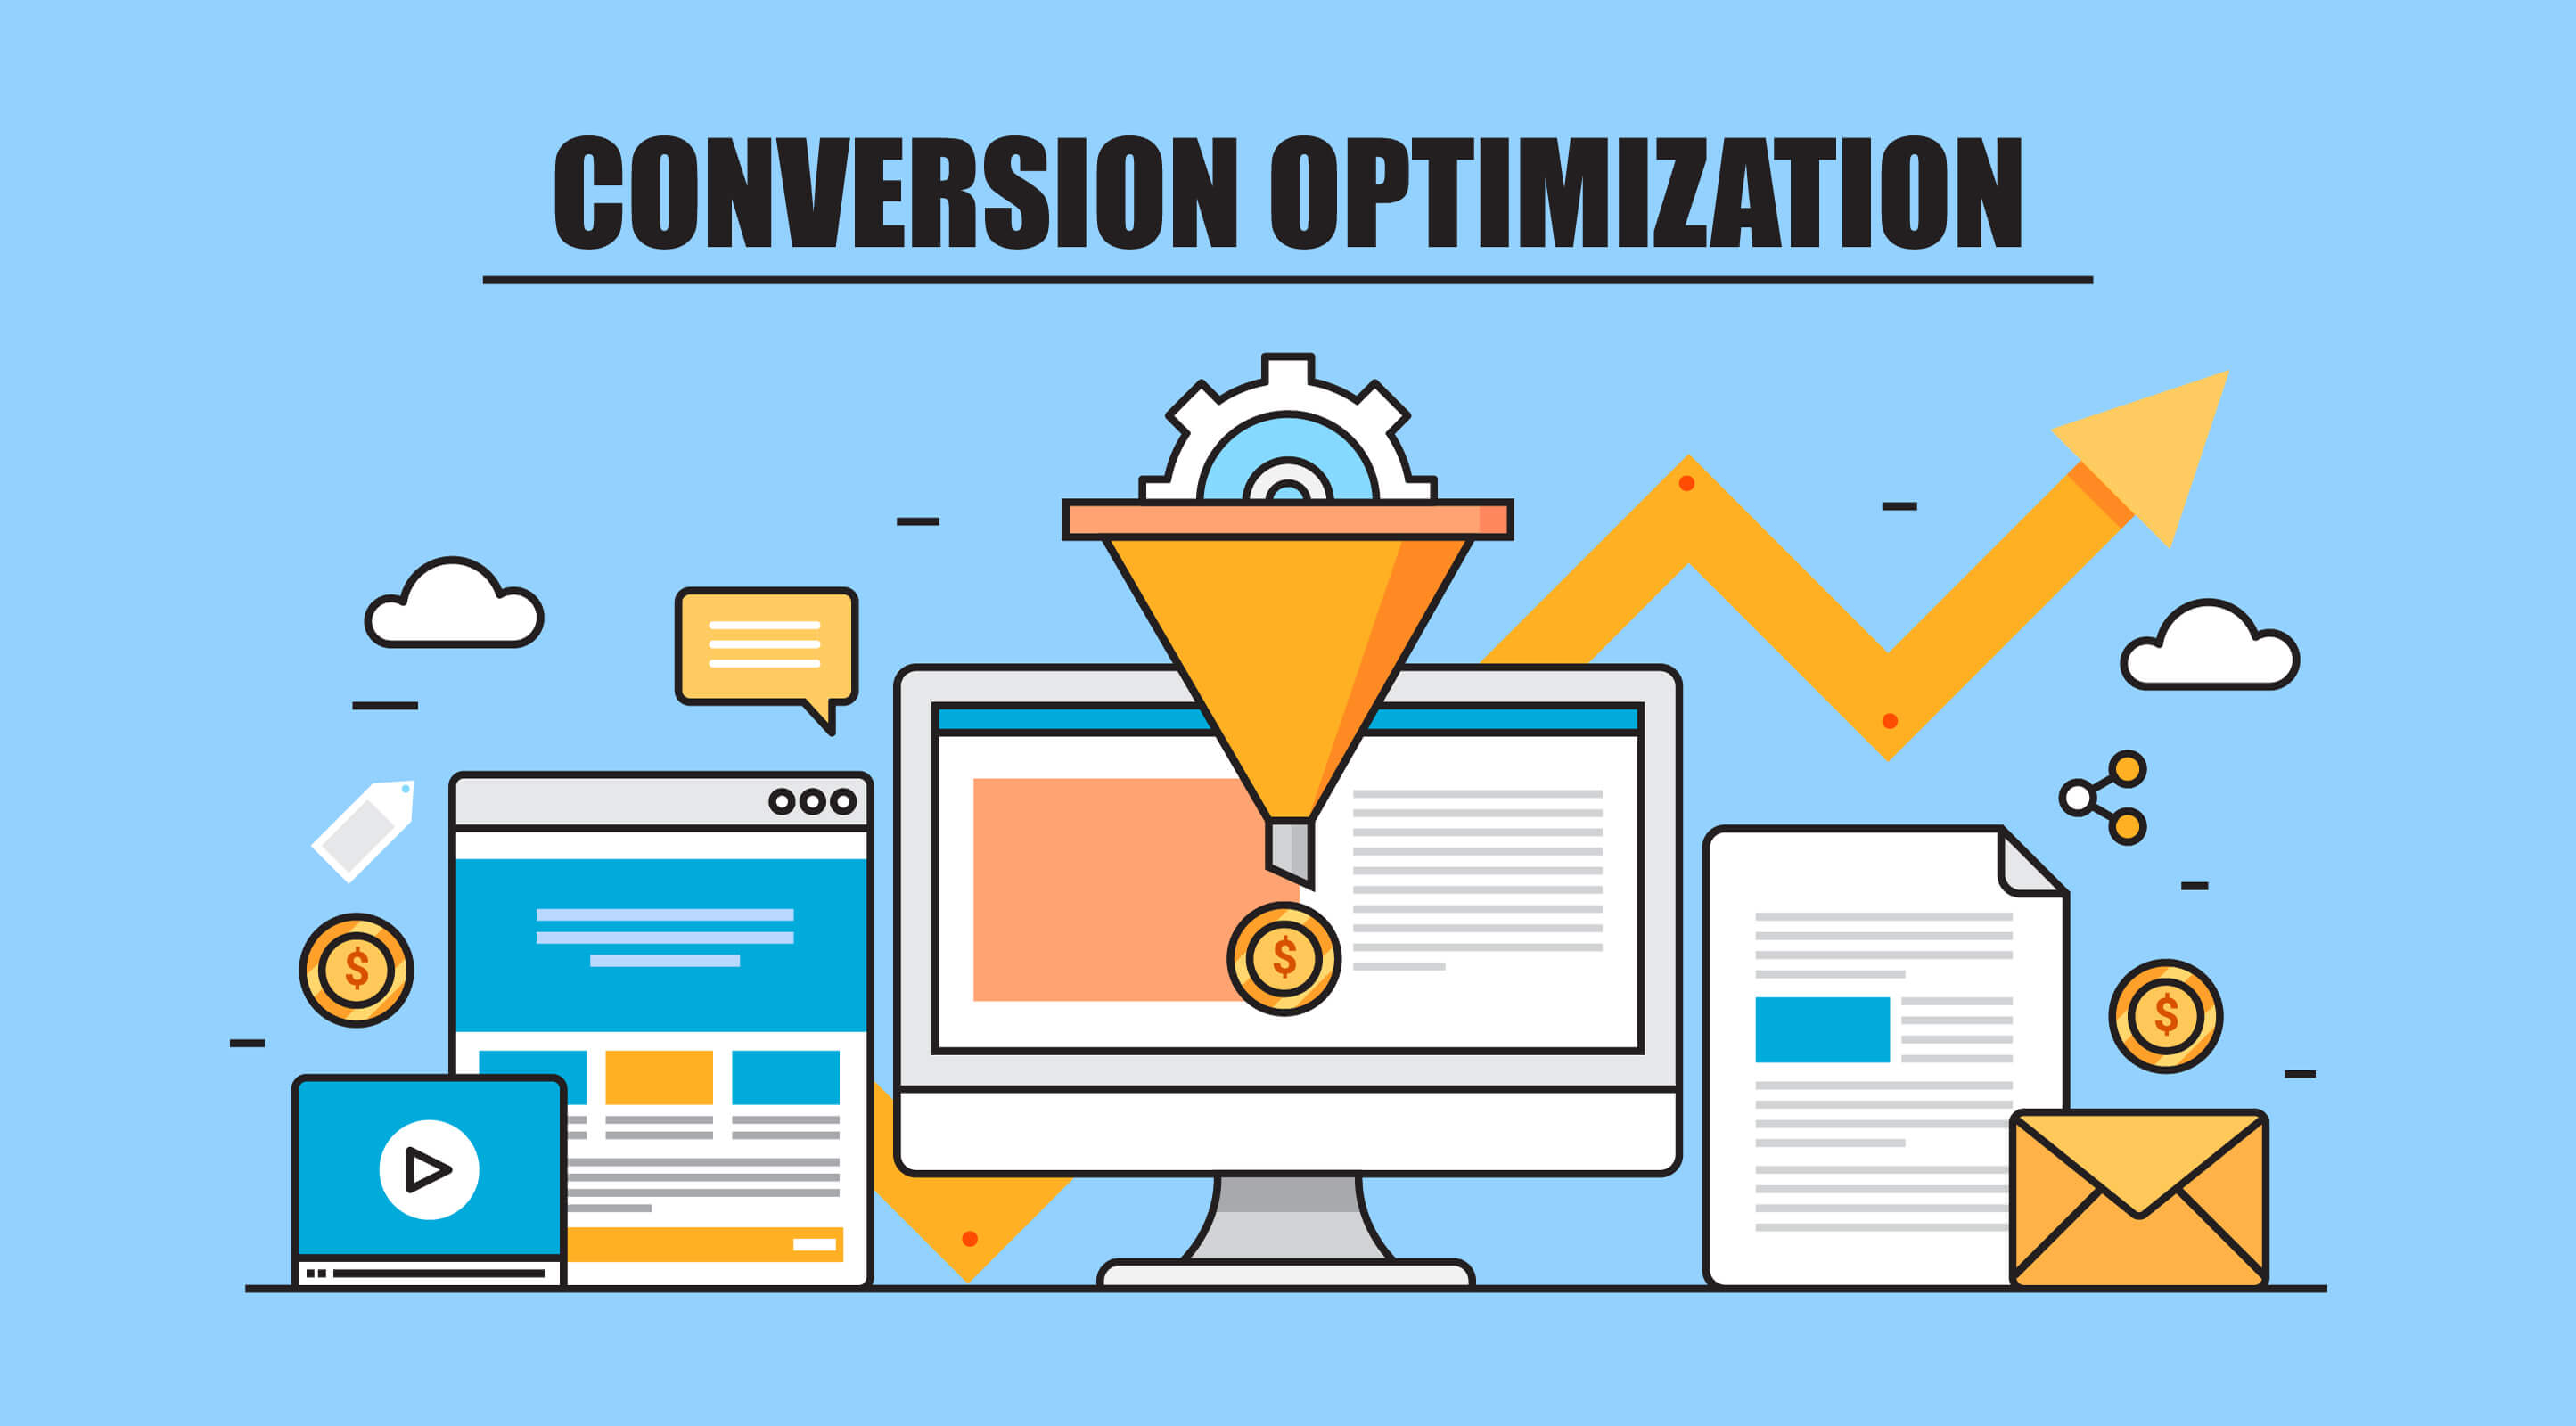 Conversion optimization – improve conversion rate